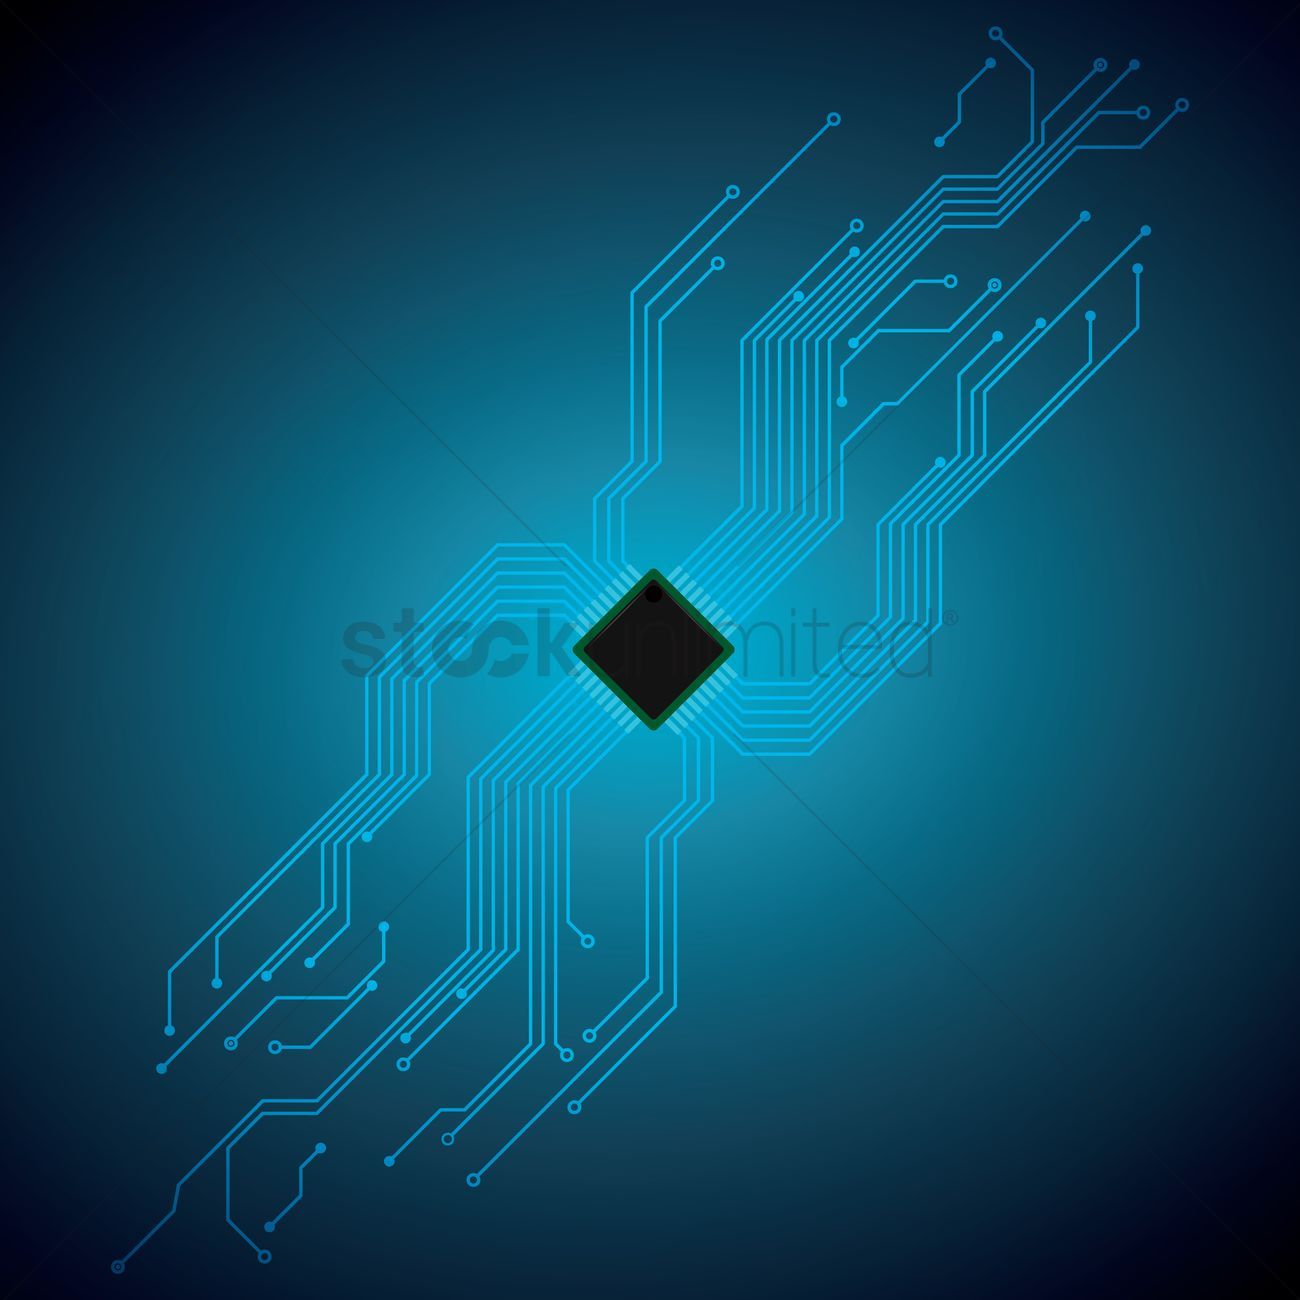 Microchip on circuit board wallpaper Vector Image